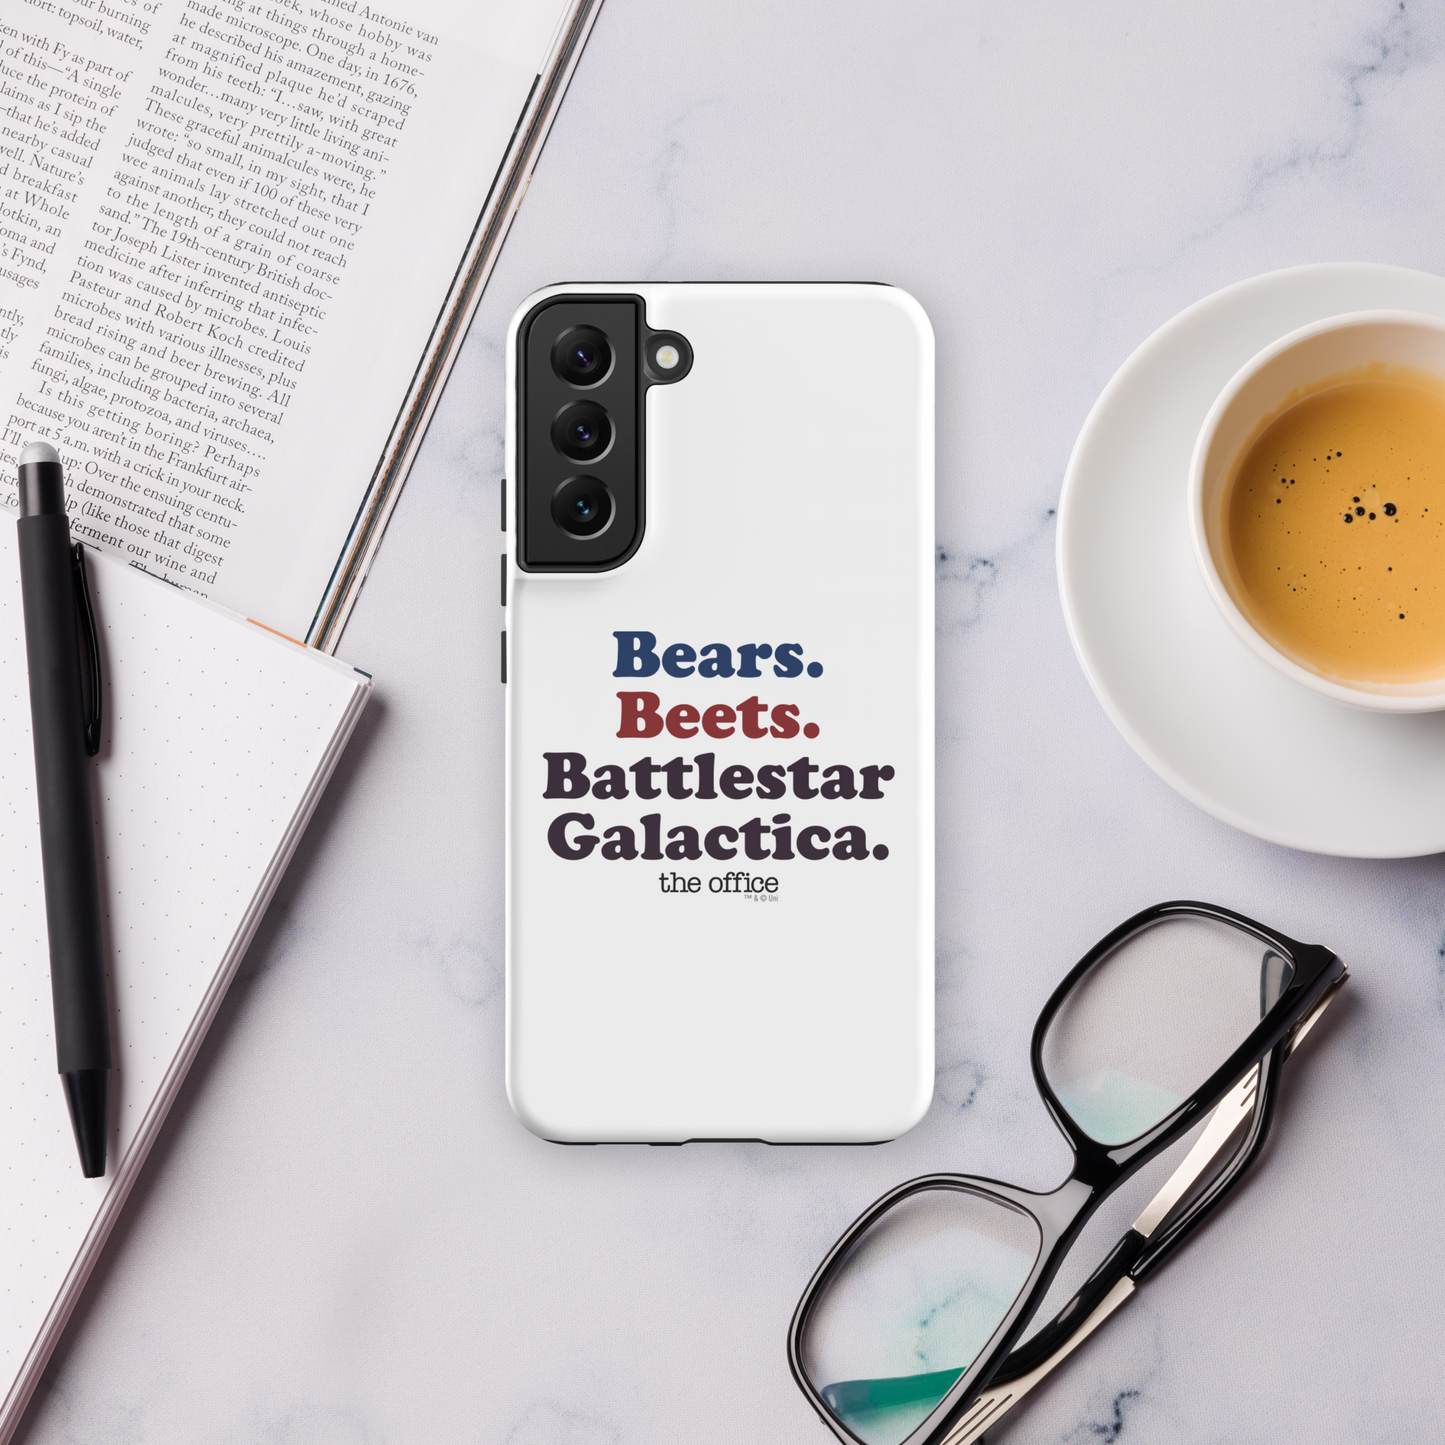 The Office Bears. Beets. Battlestar Galactica Tough Phone Case - Samsung